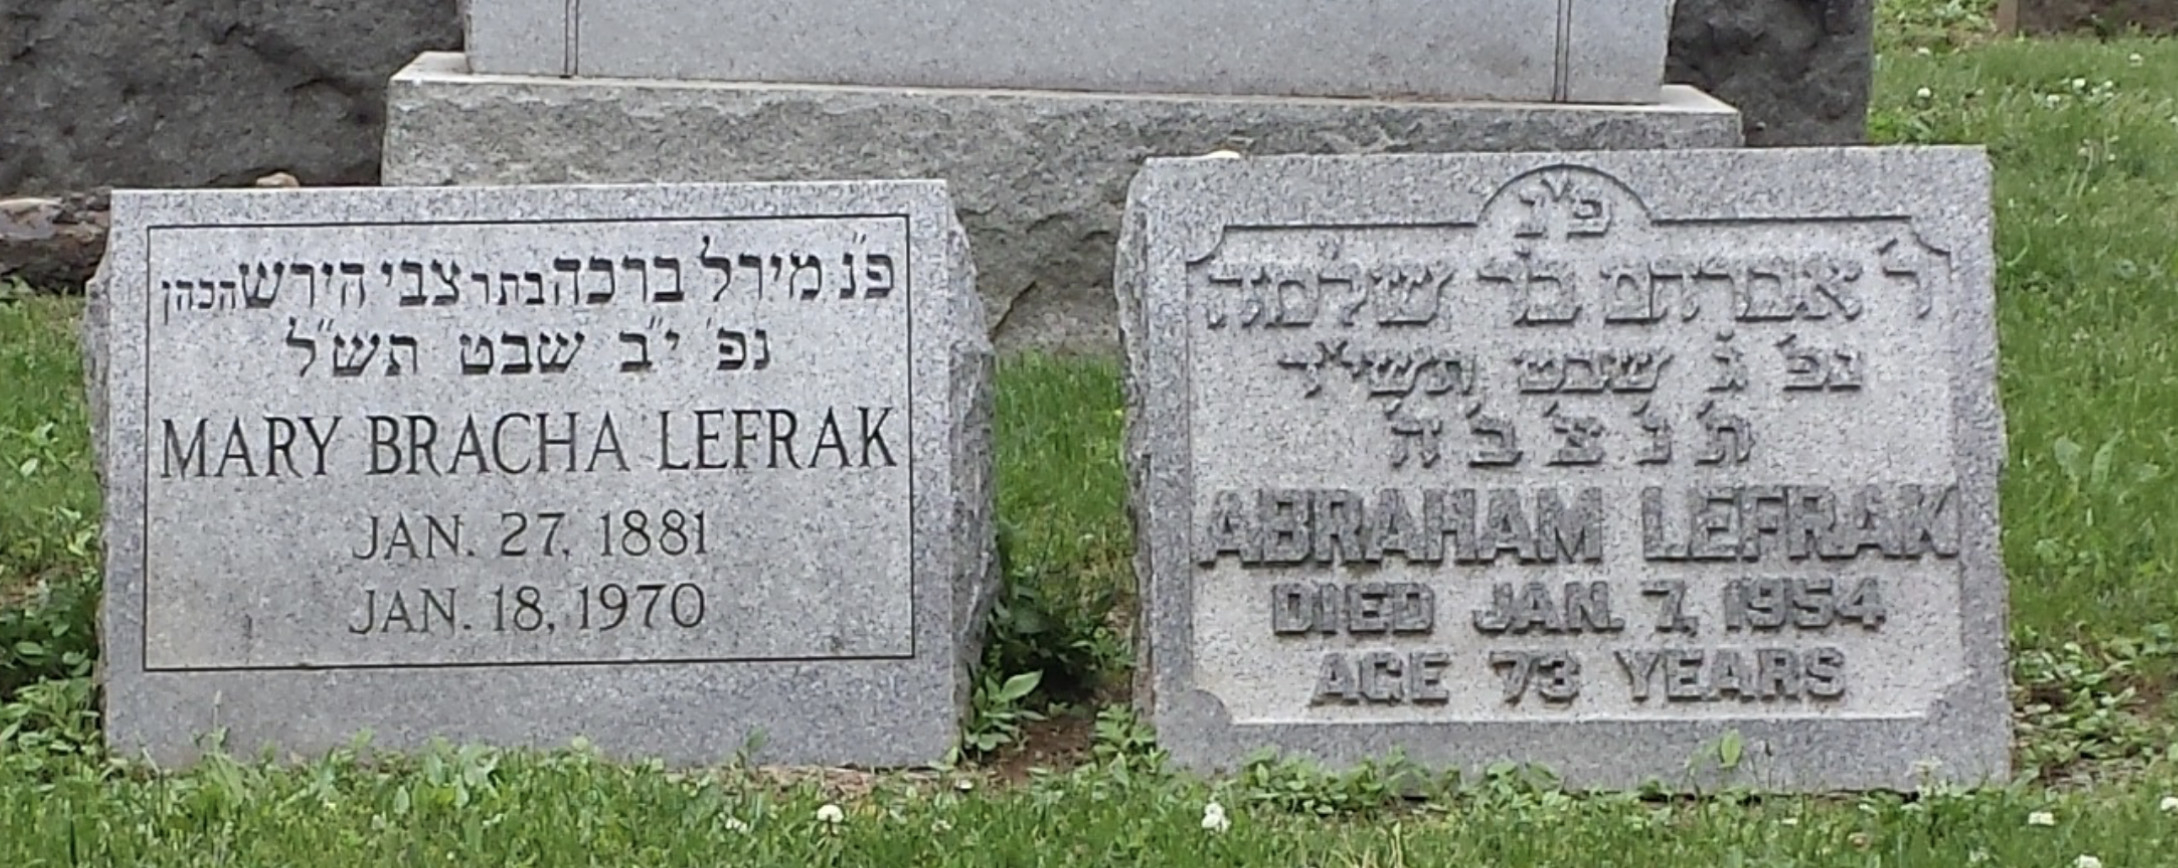 Abraham Lefrak